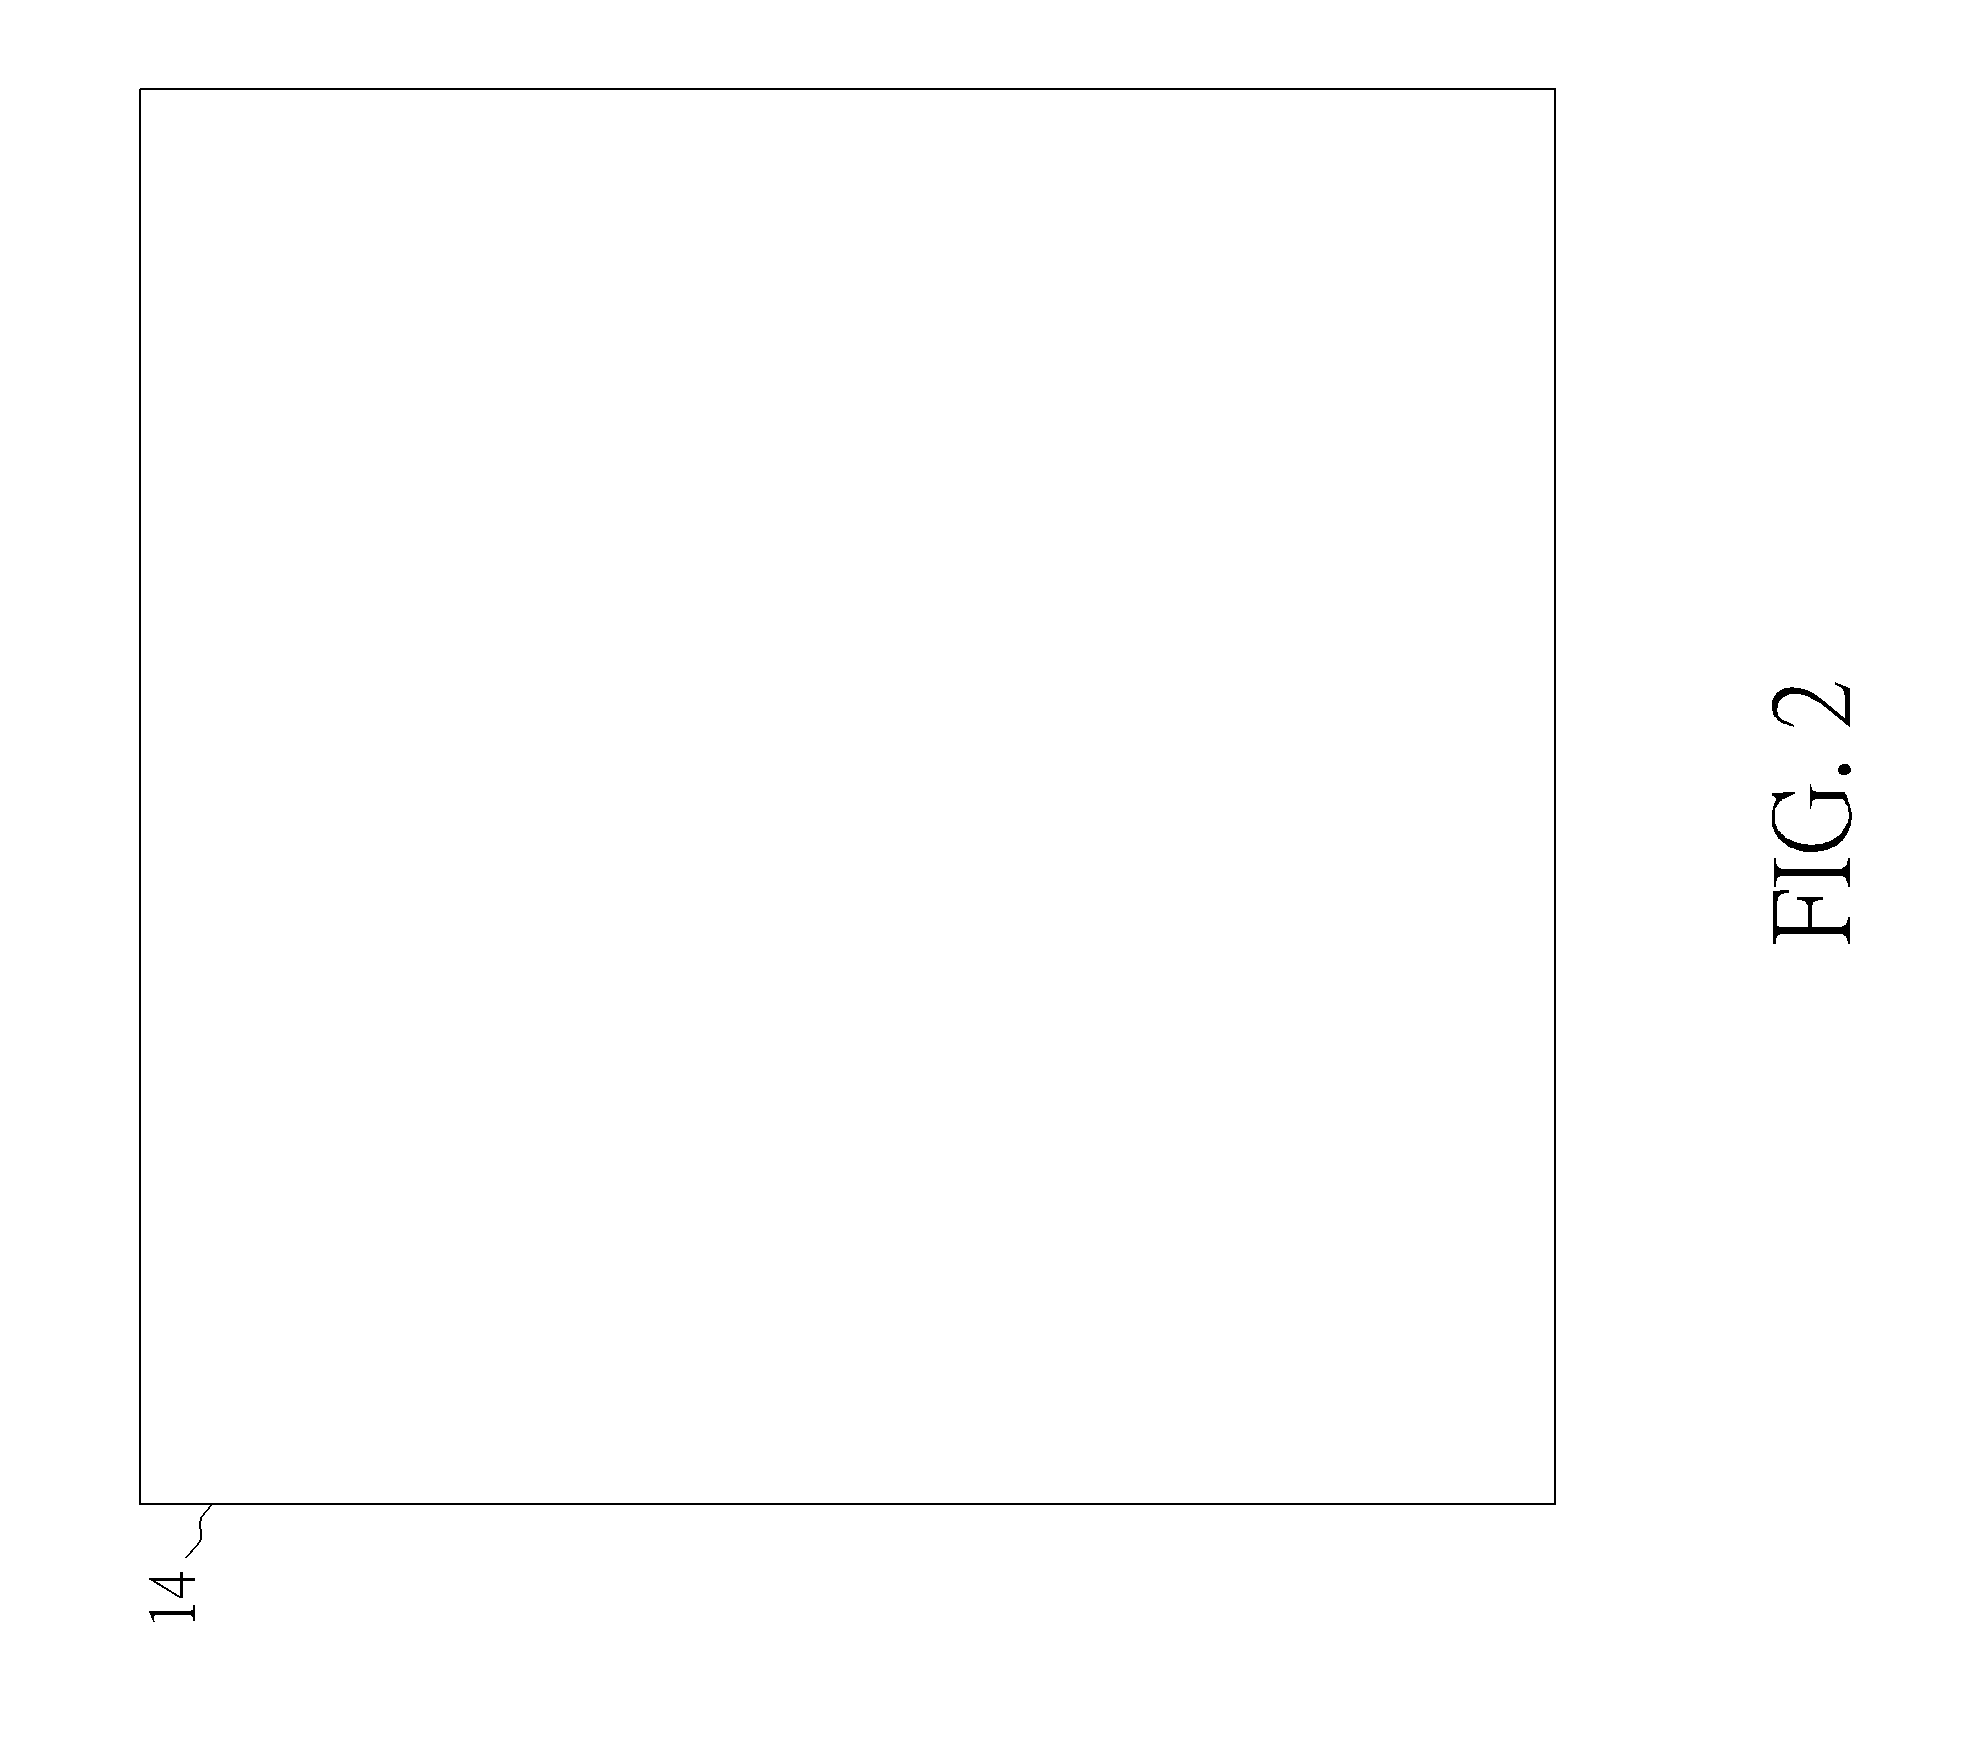 Pixel structure of display panel